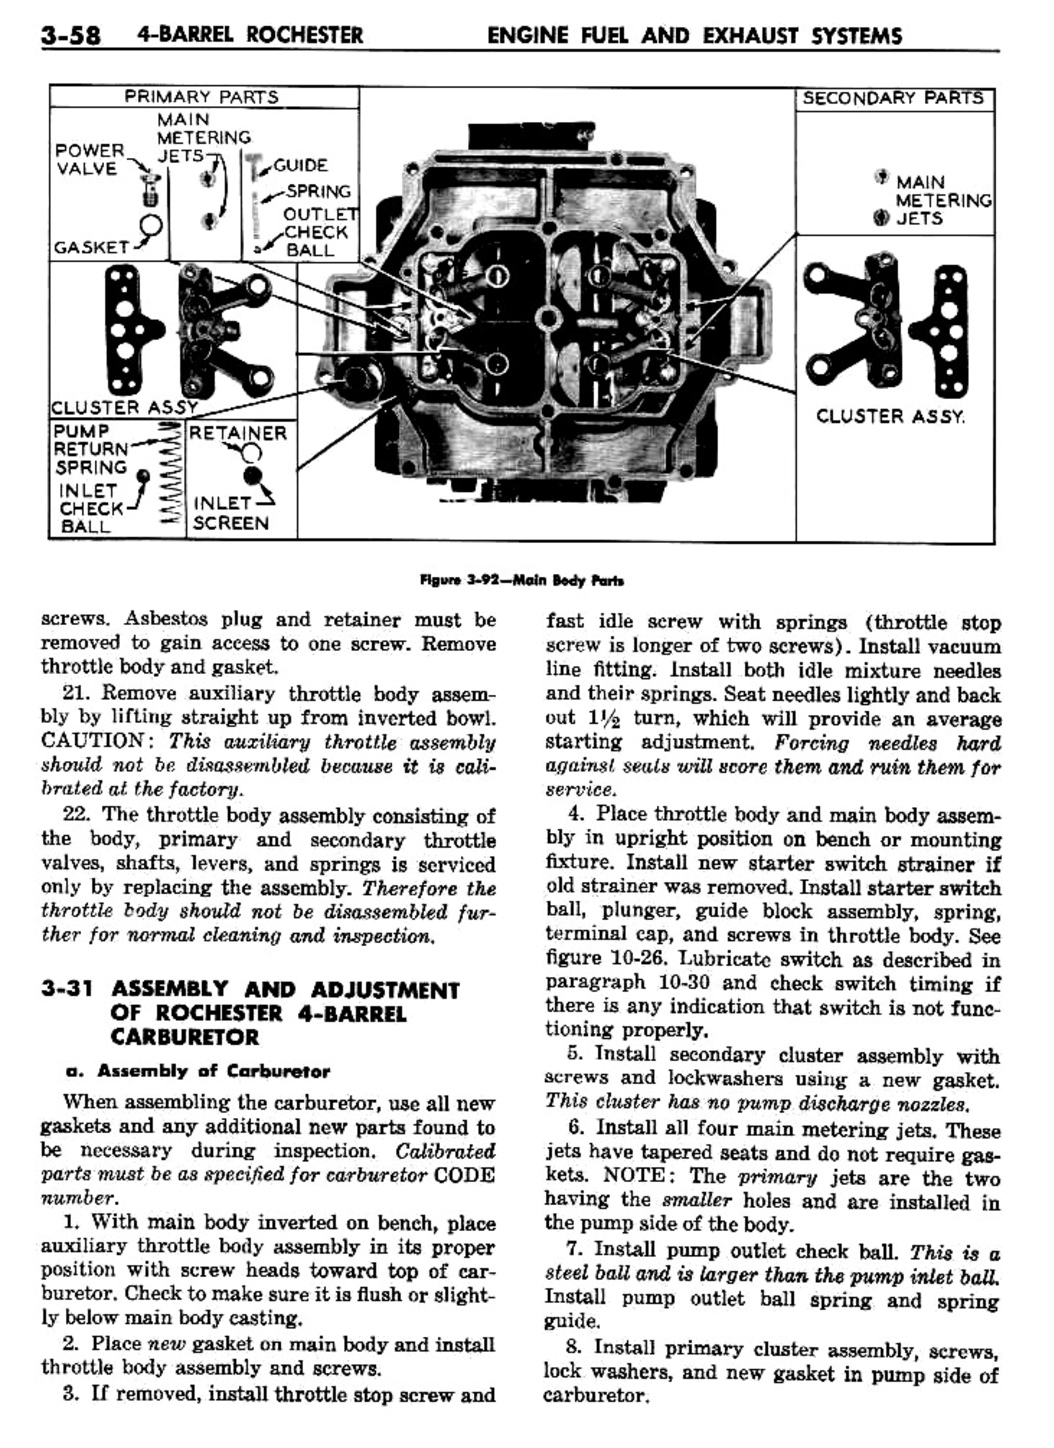 n_04 1957 Buick Shop Manual - Engine Fuel & Exhaust-058-058.jpg